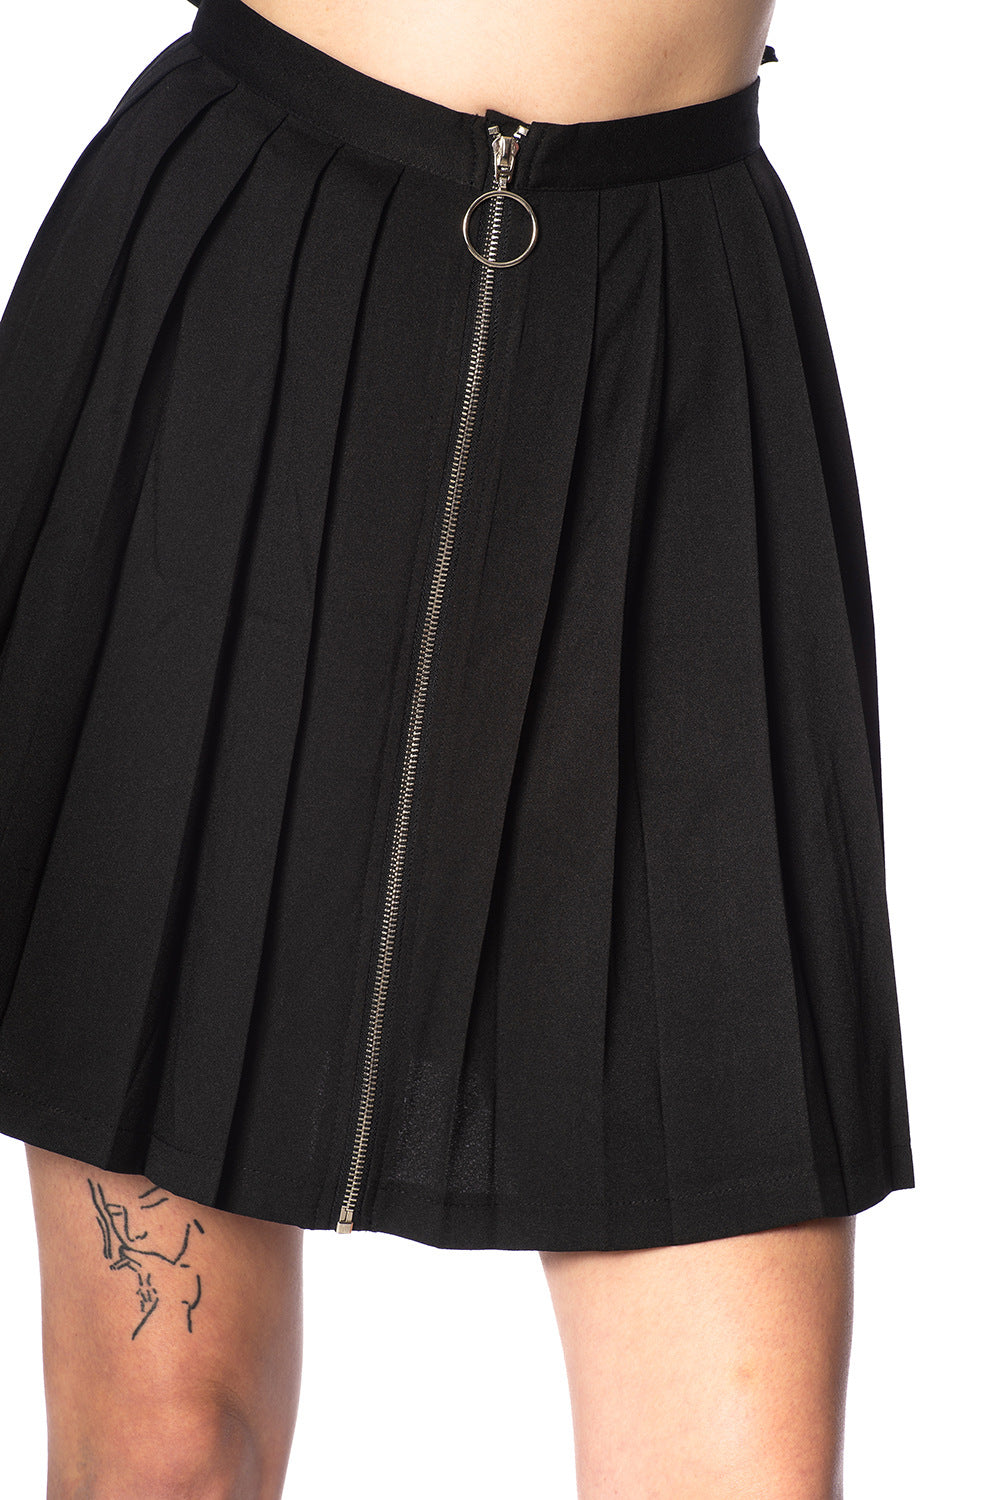 Banned Alternative Urban Vamp Pleats Skirt